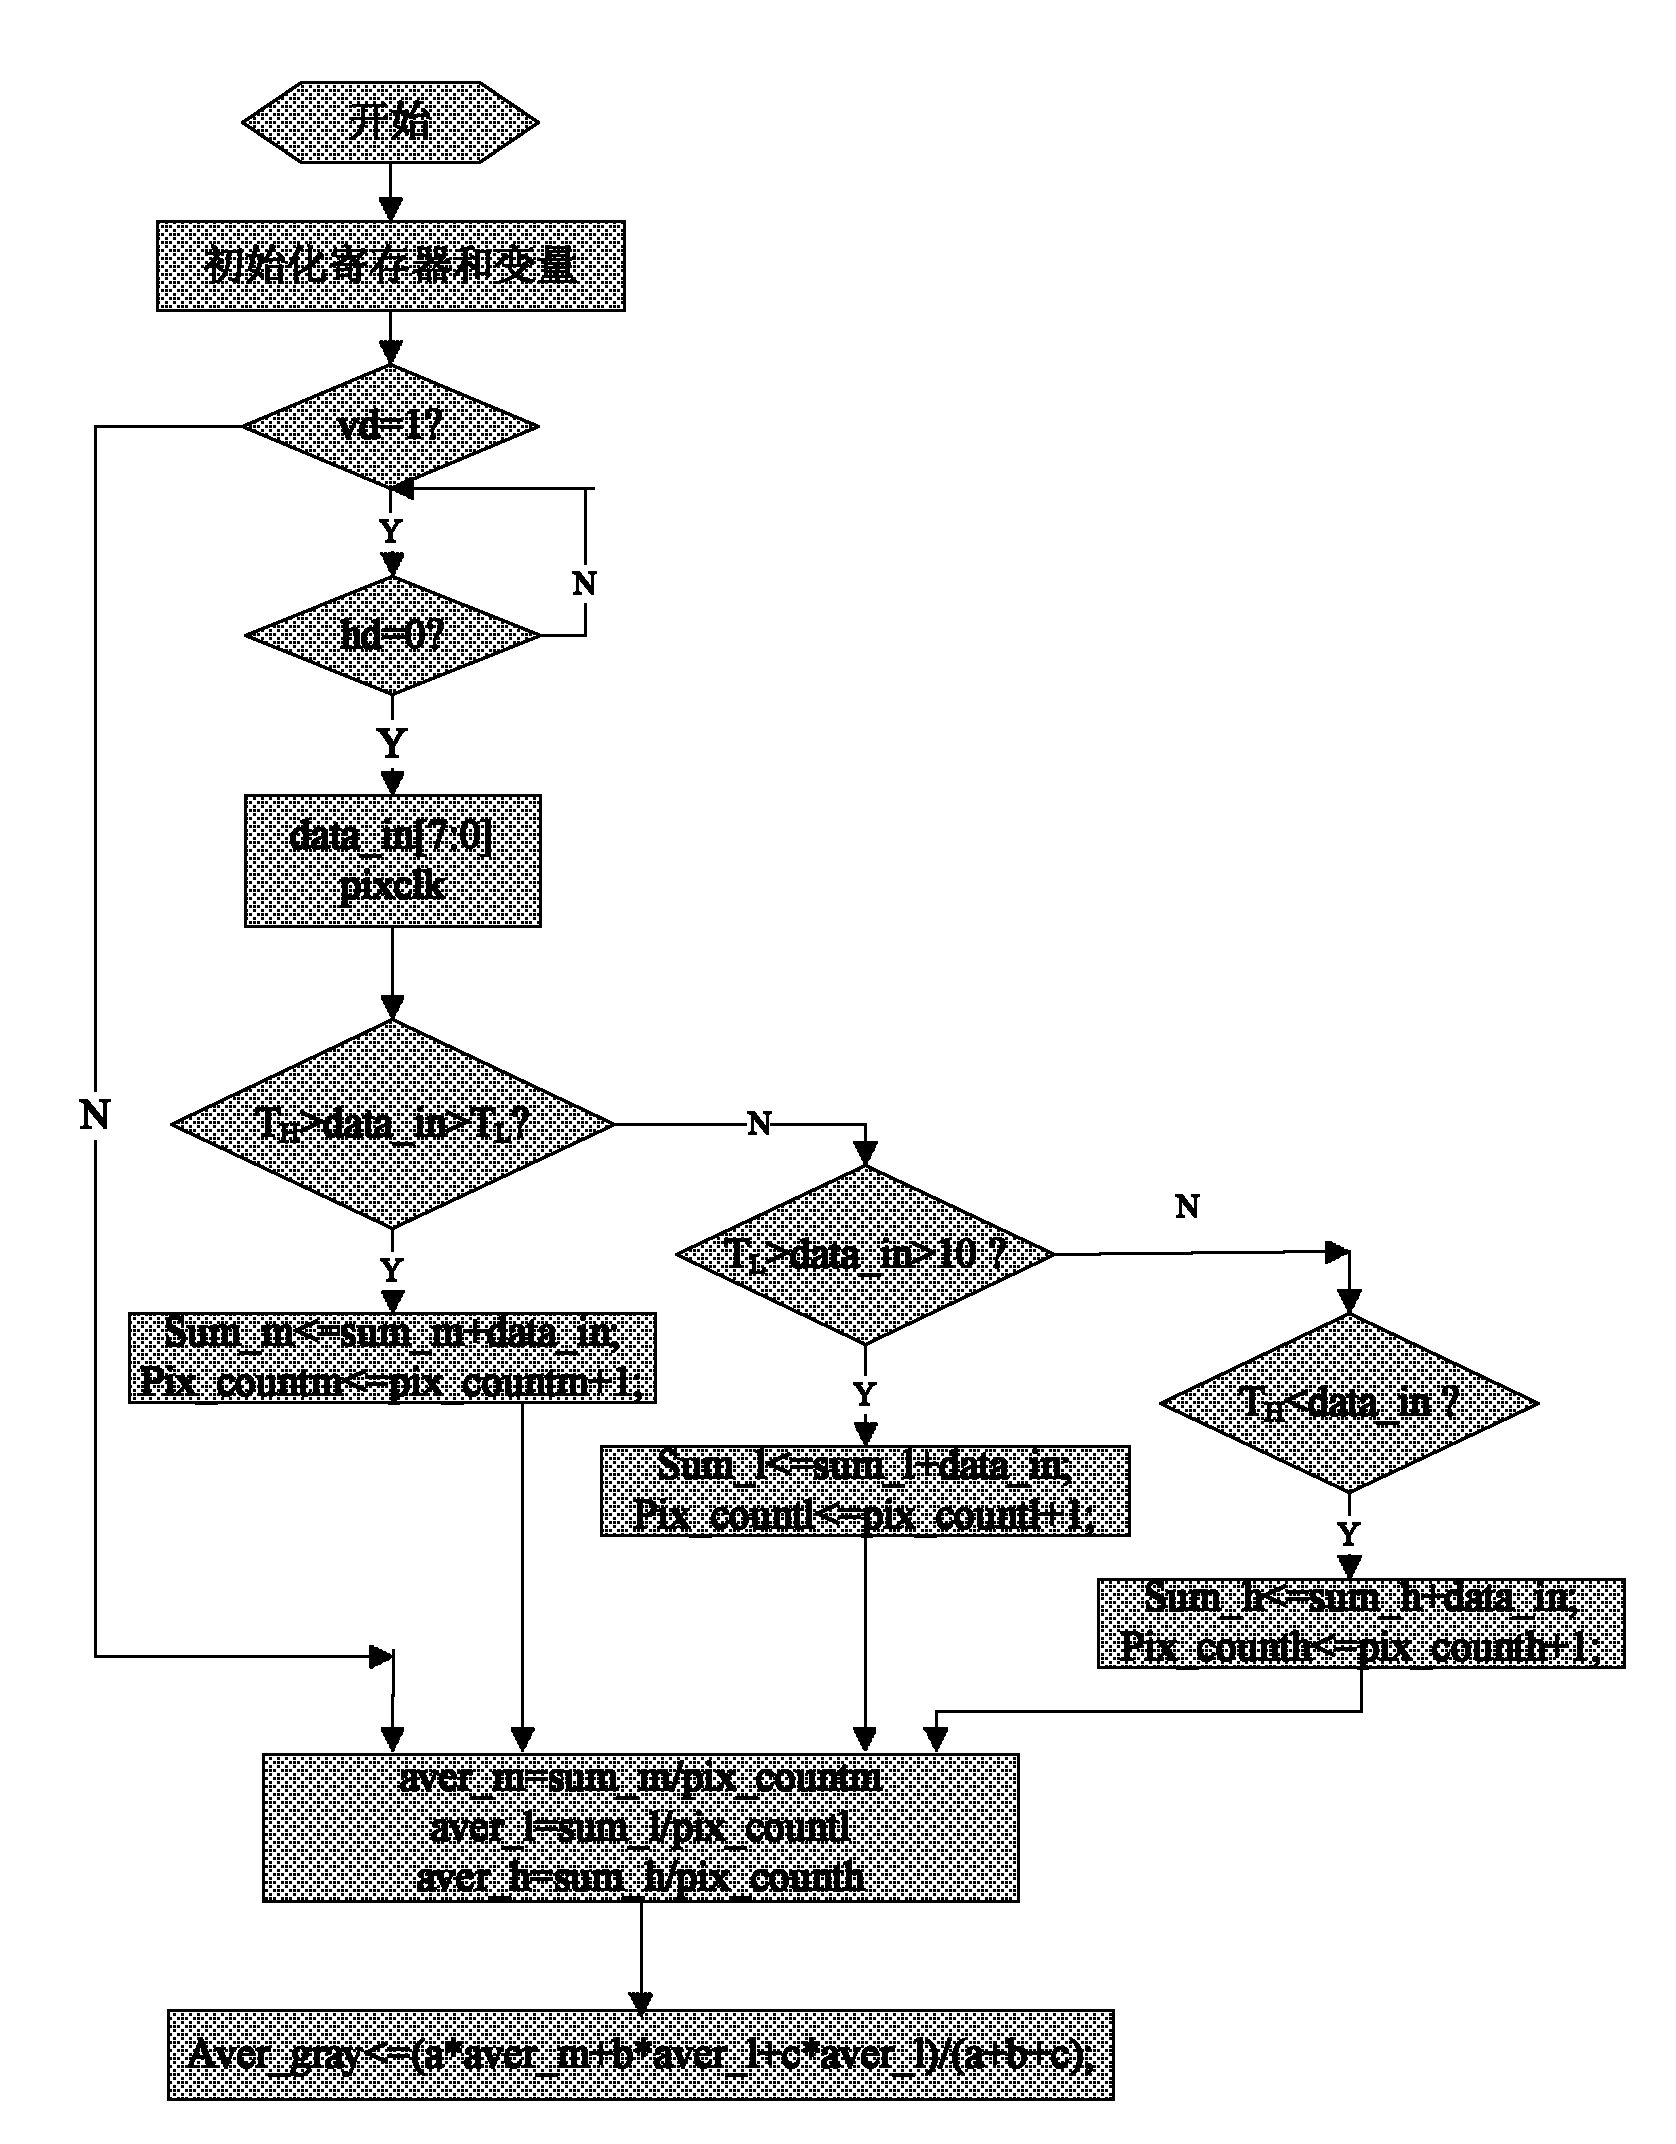 Automatic exposure method based on analogous column diagram